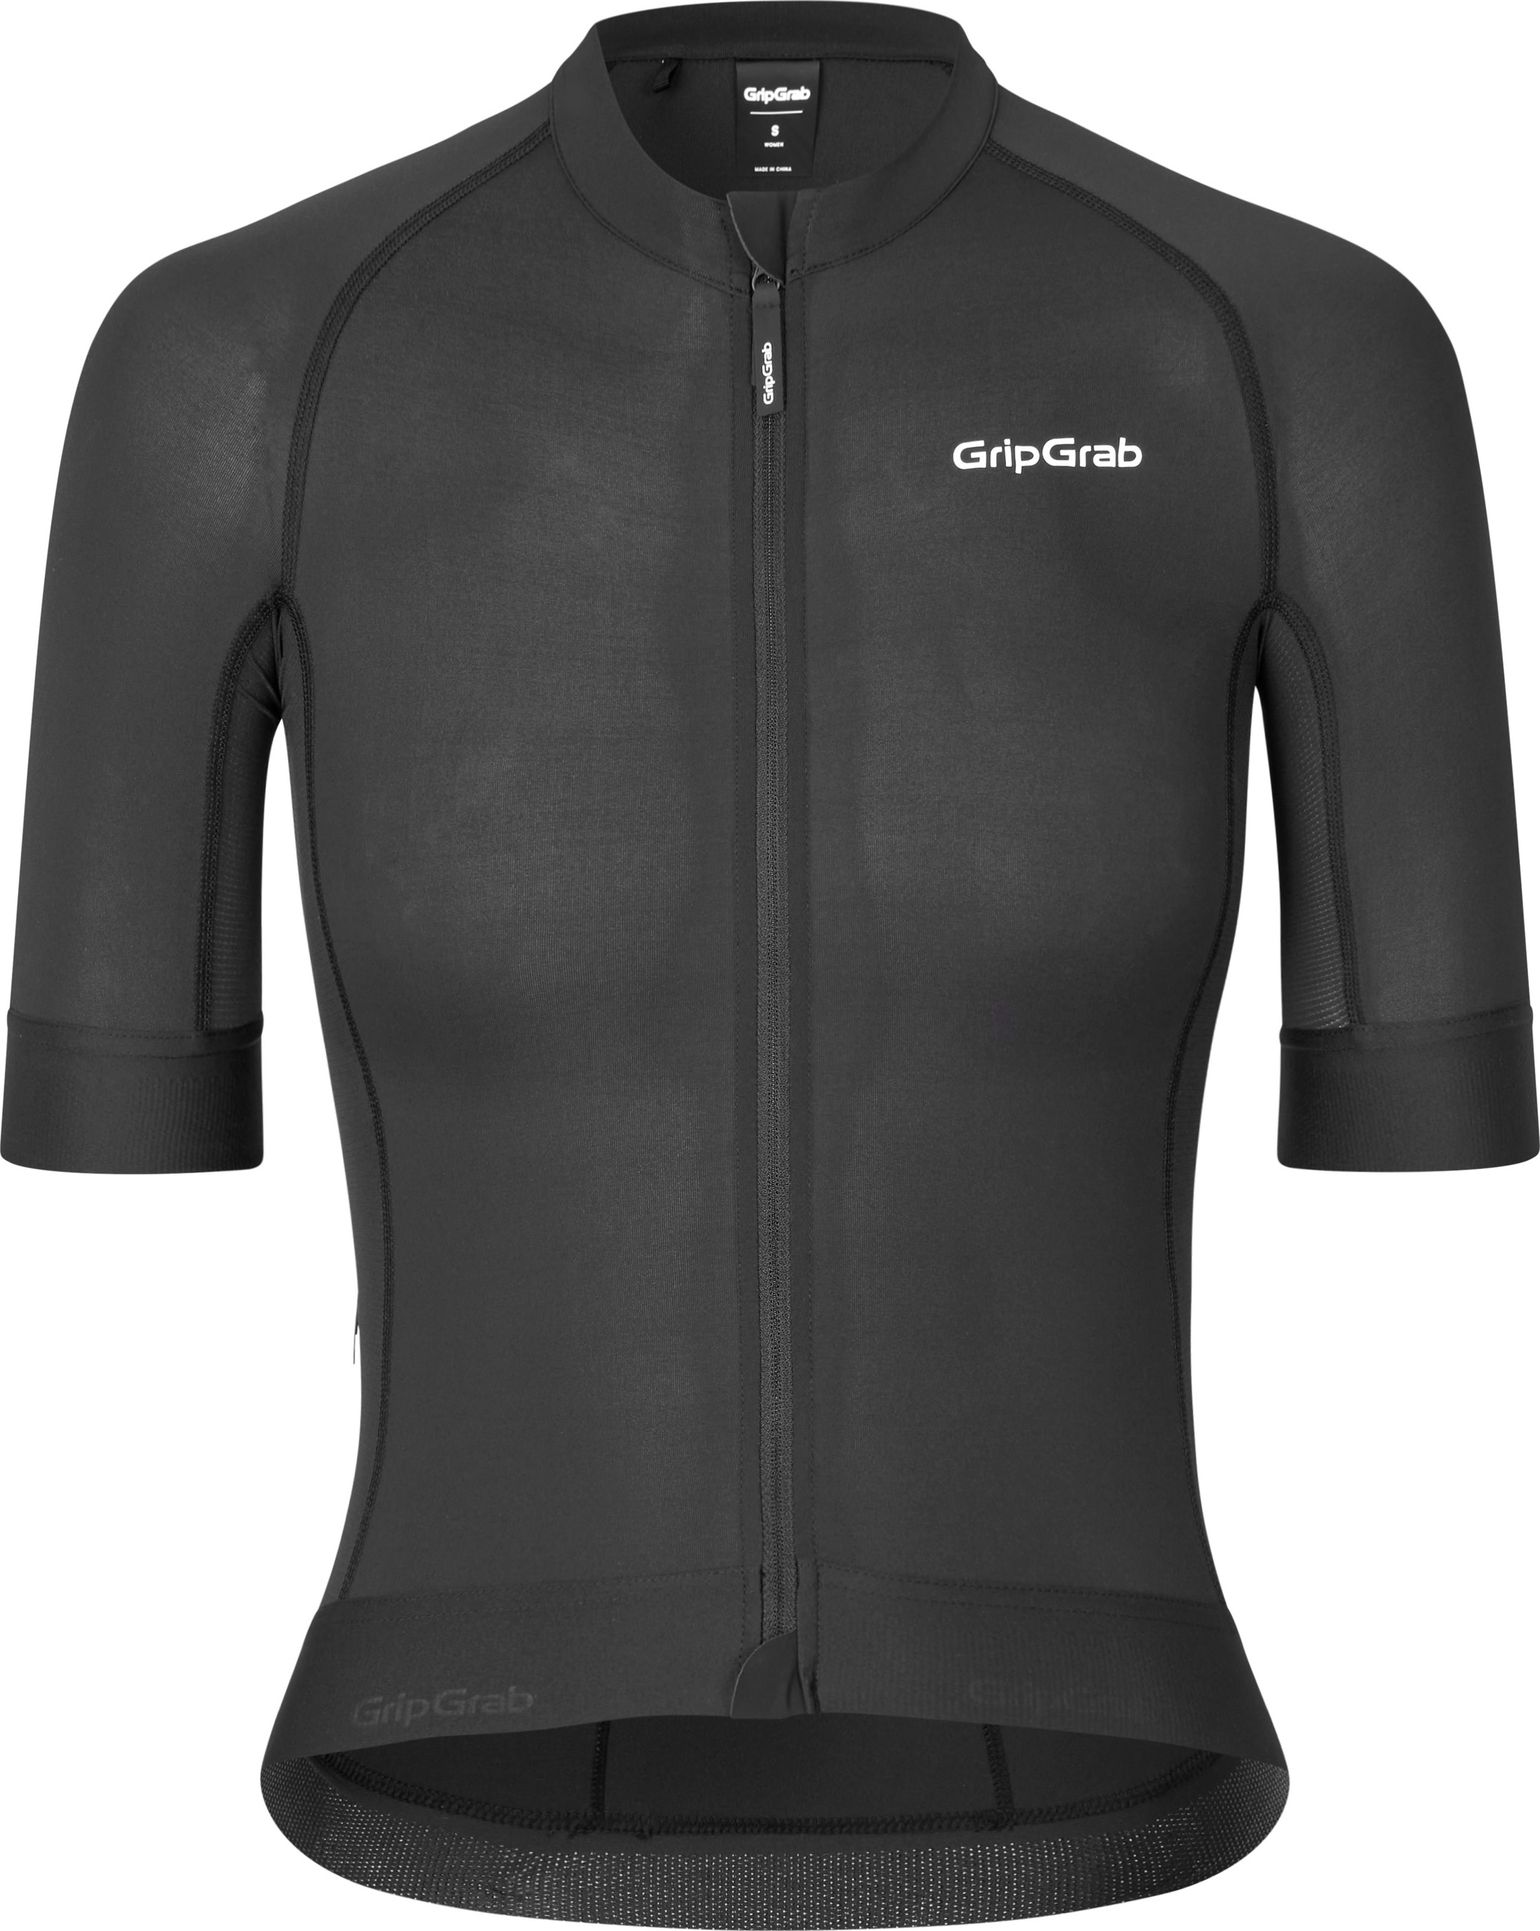 Gripgrab Women's Pace Short Sleeve Jersey Black